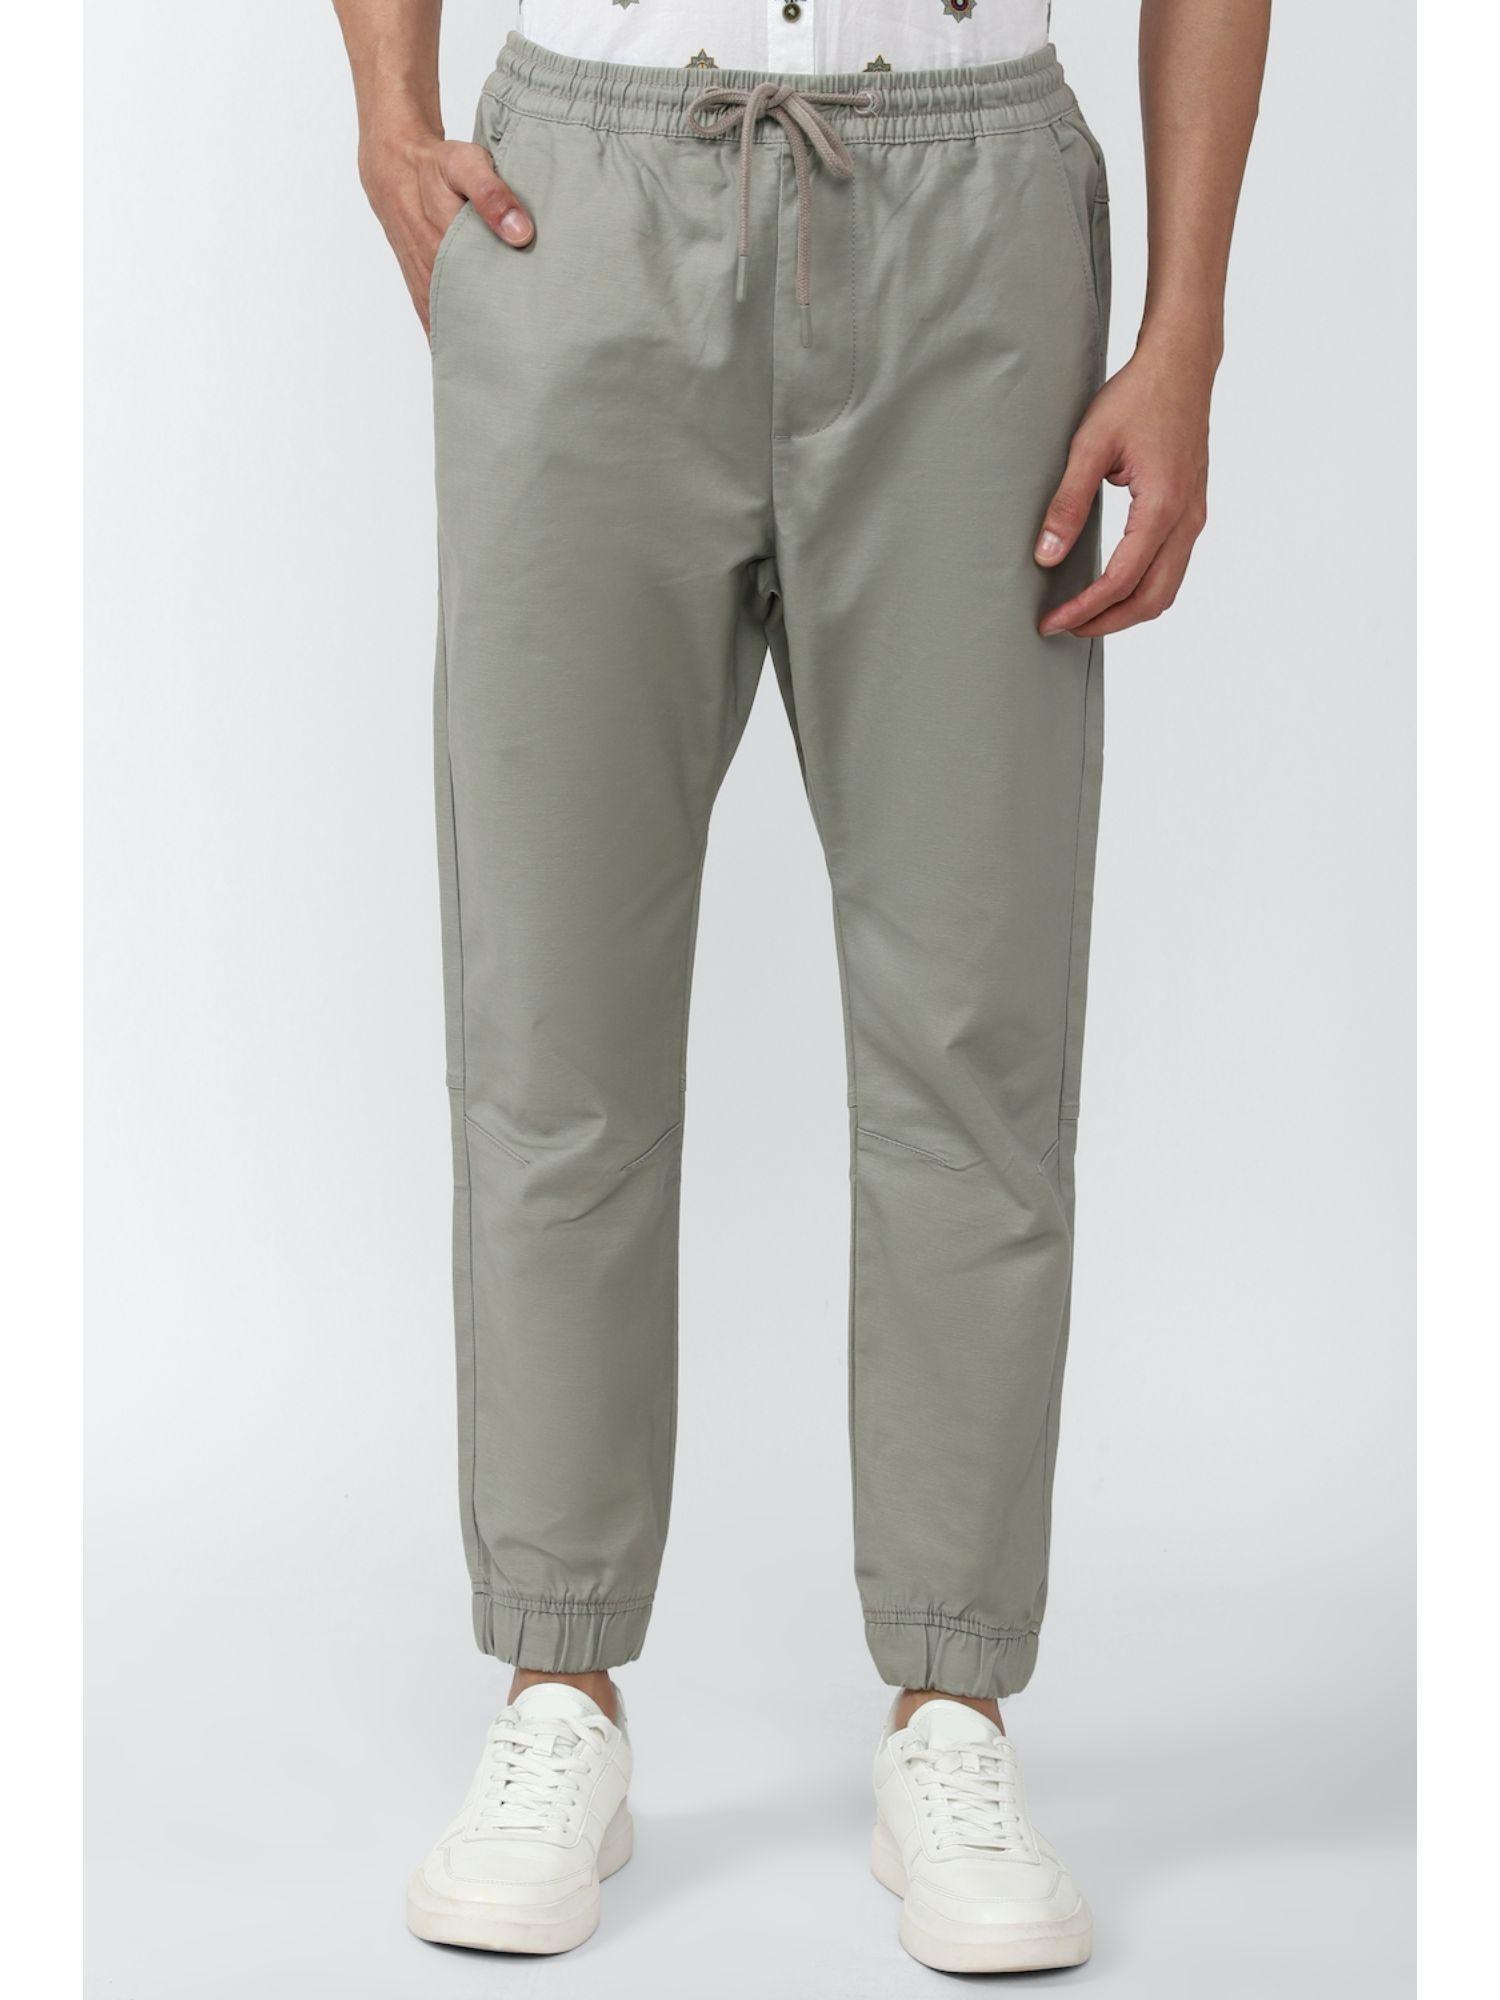 men-grey-solid-casual-track-pants